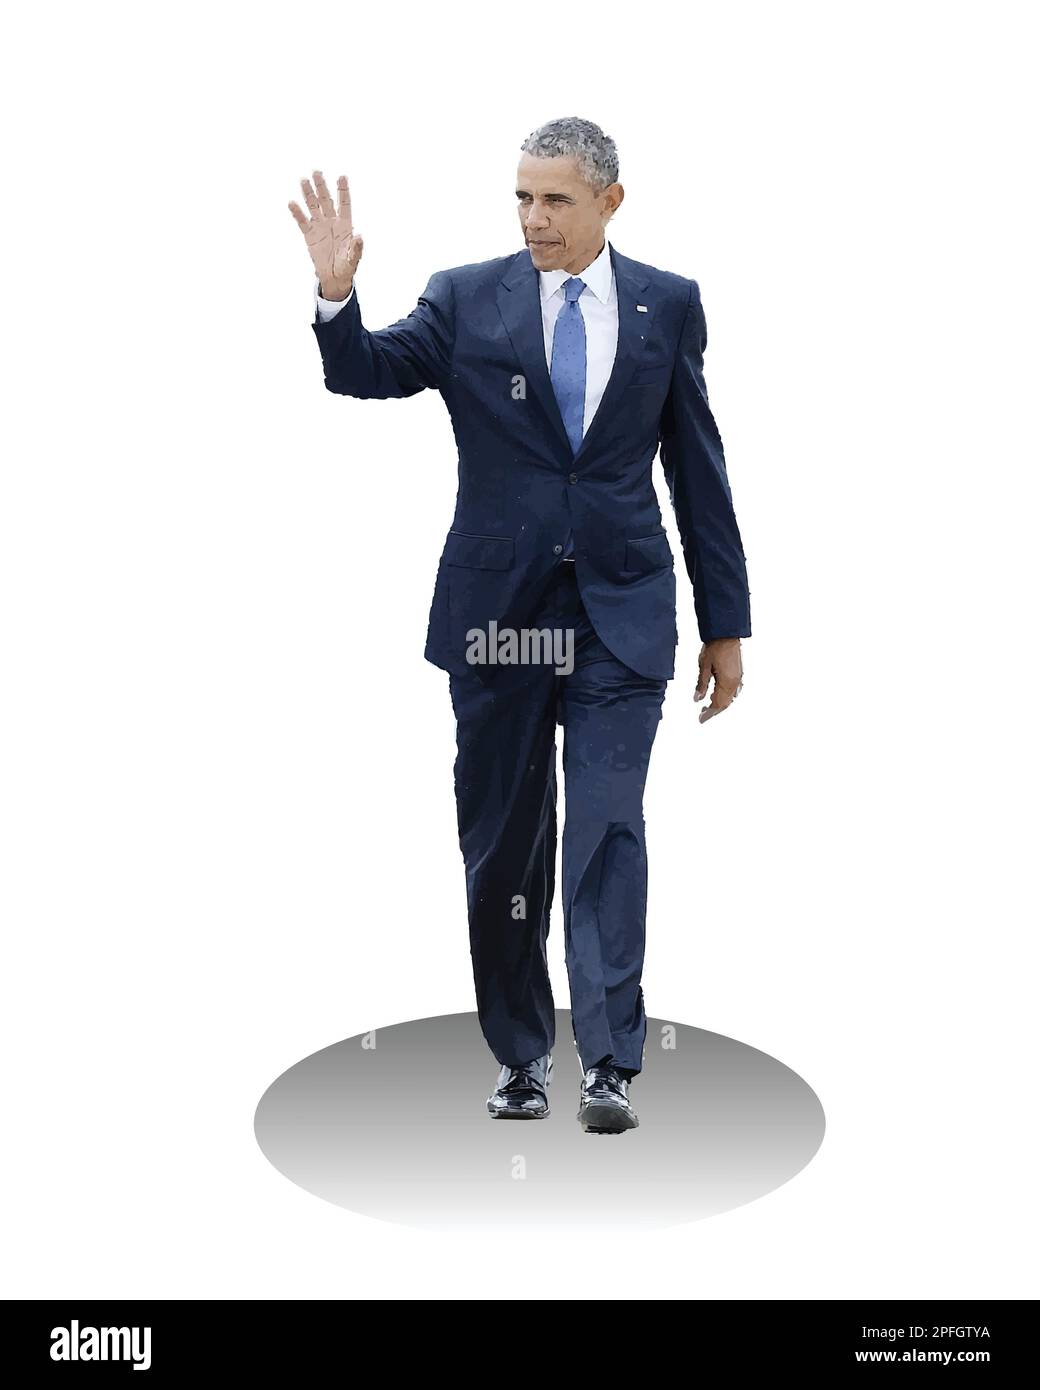 Barack Obama 44th U.S. President Vector Illustration image Stock Vector